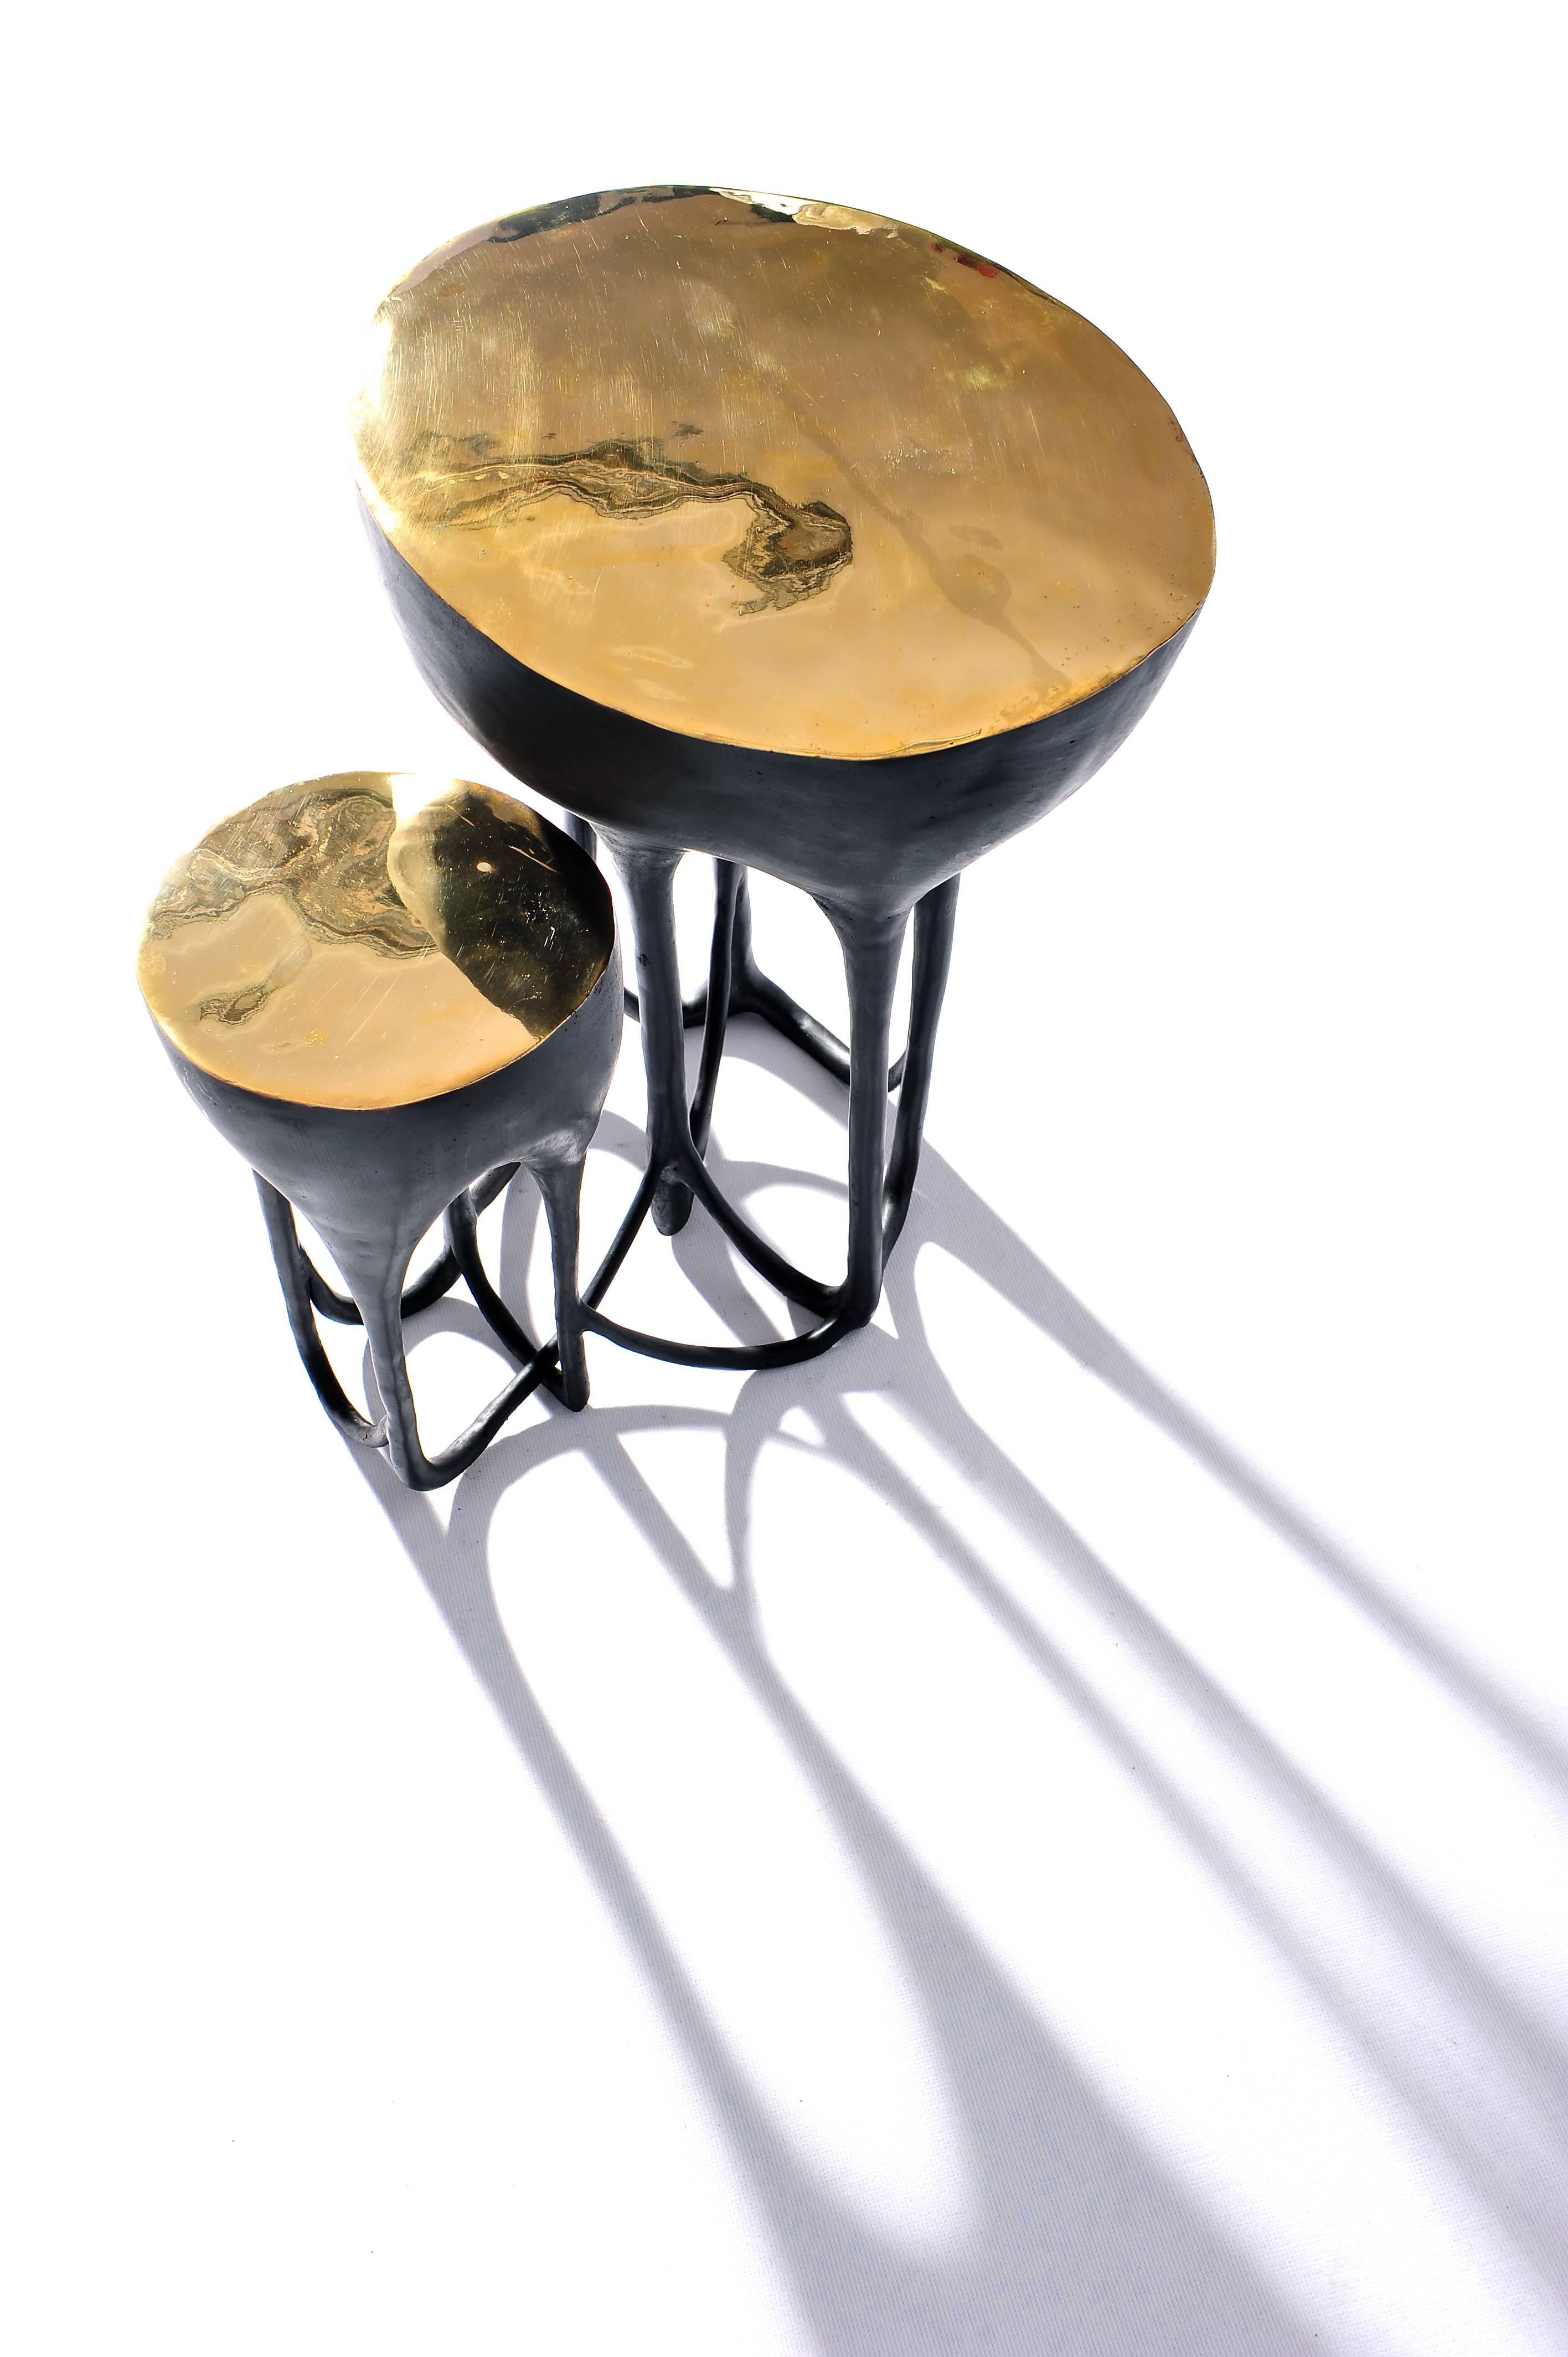 Rakk by Masaya
Brass hand-sculpted side table 
Dimensions: H 50 x W 43 x L 50 cm.